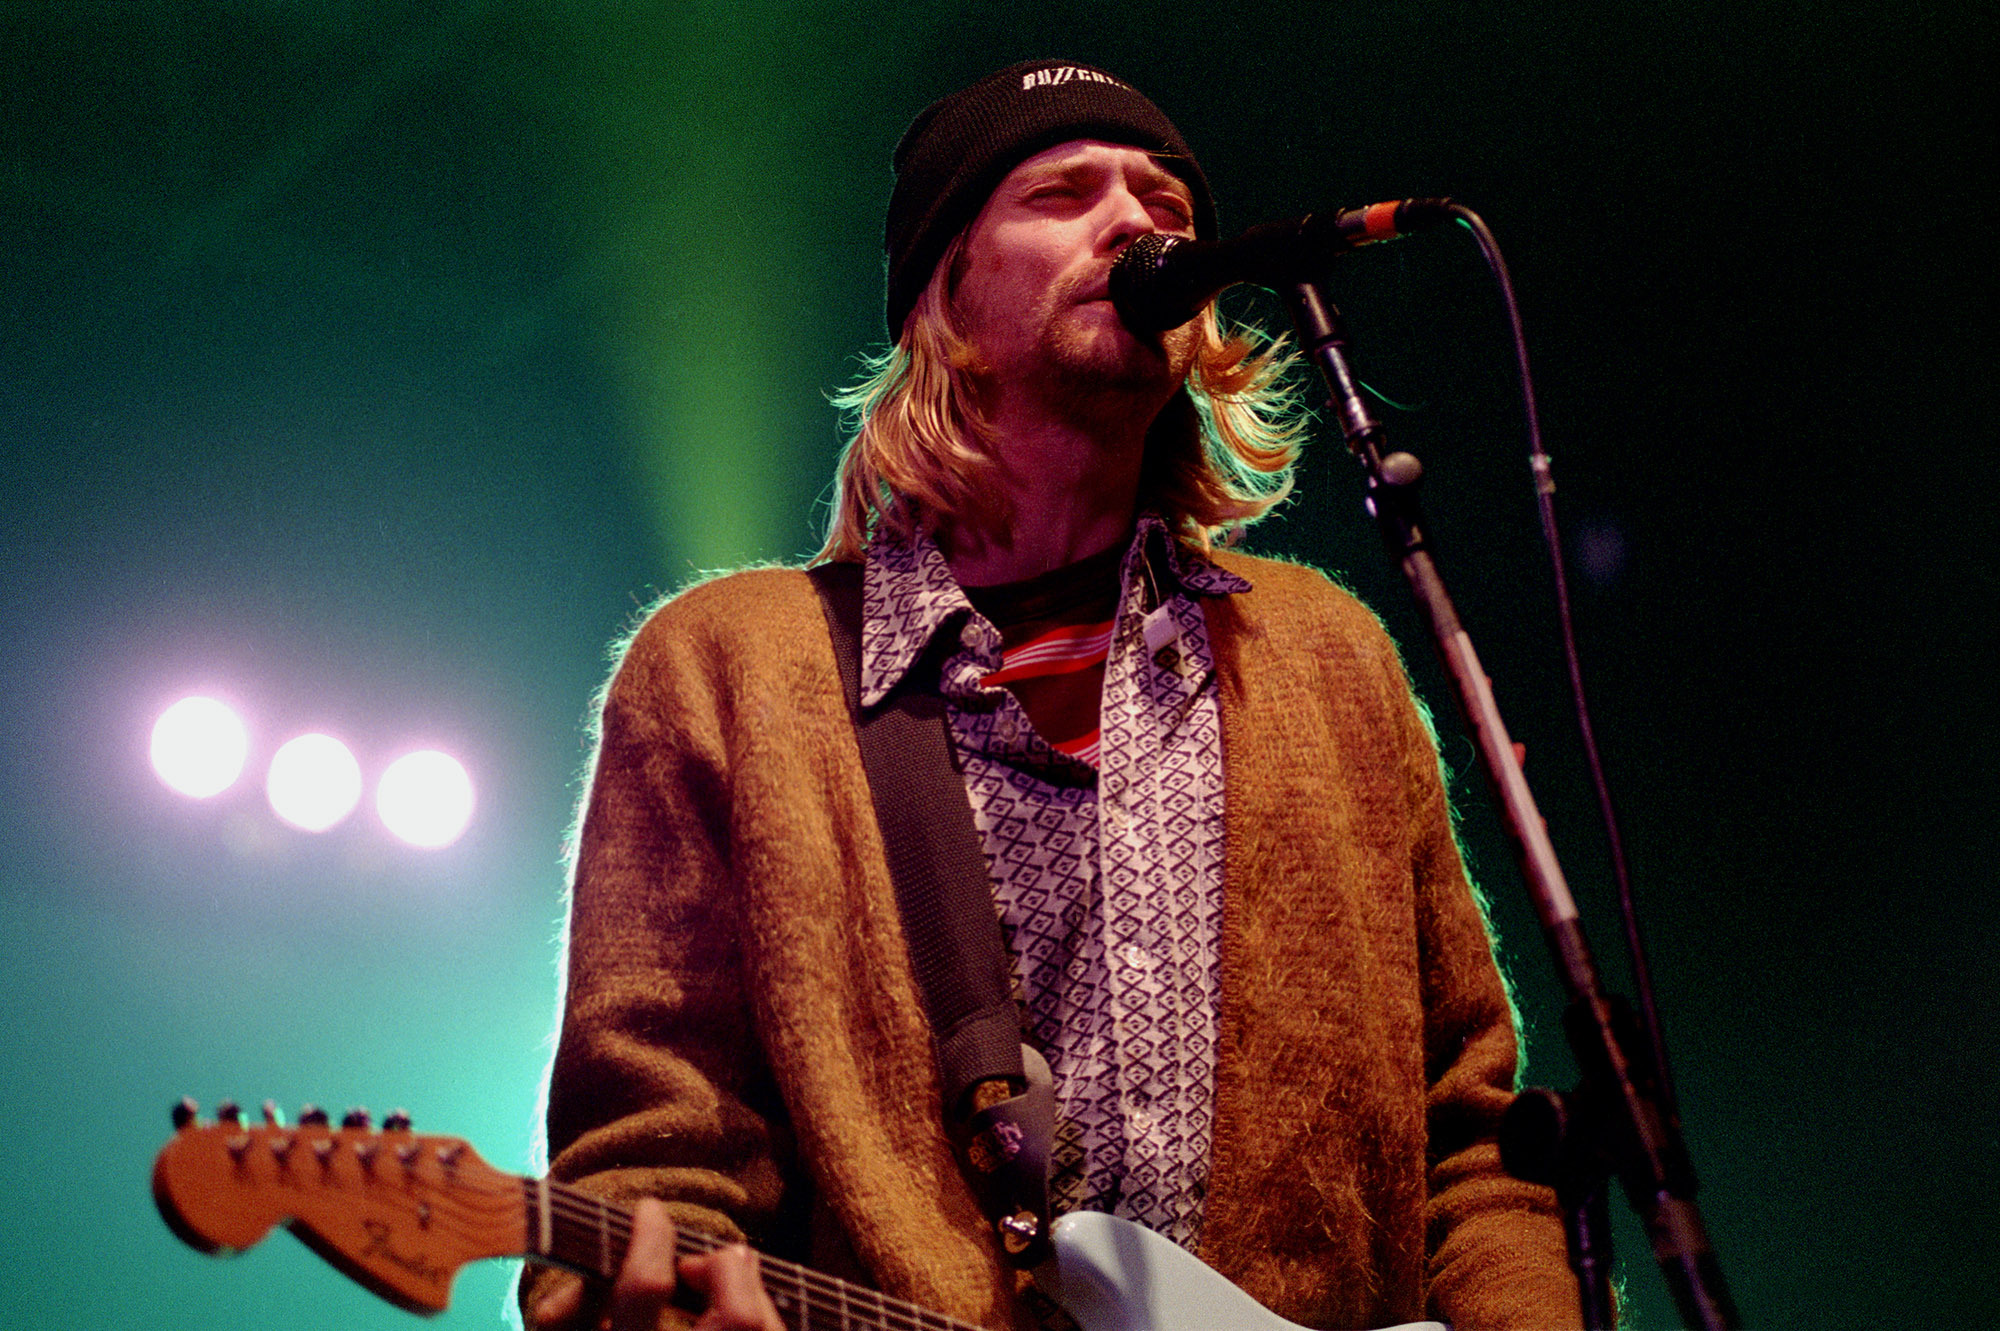 Milan Italy, 25 February 1994,  live concert of Nirvana at the Palatrussardi : The singer and guitarist of Nirvana, Kurt Cobain, during the concert